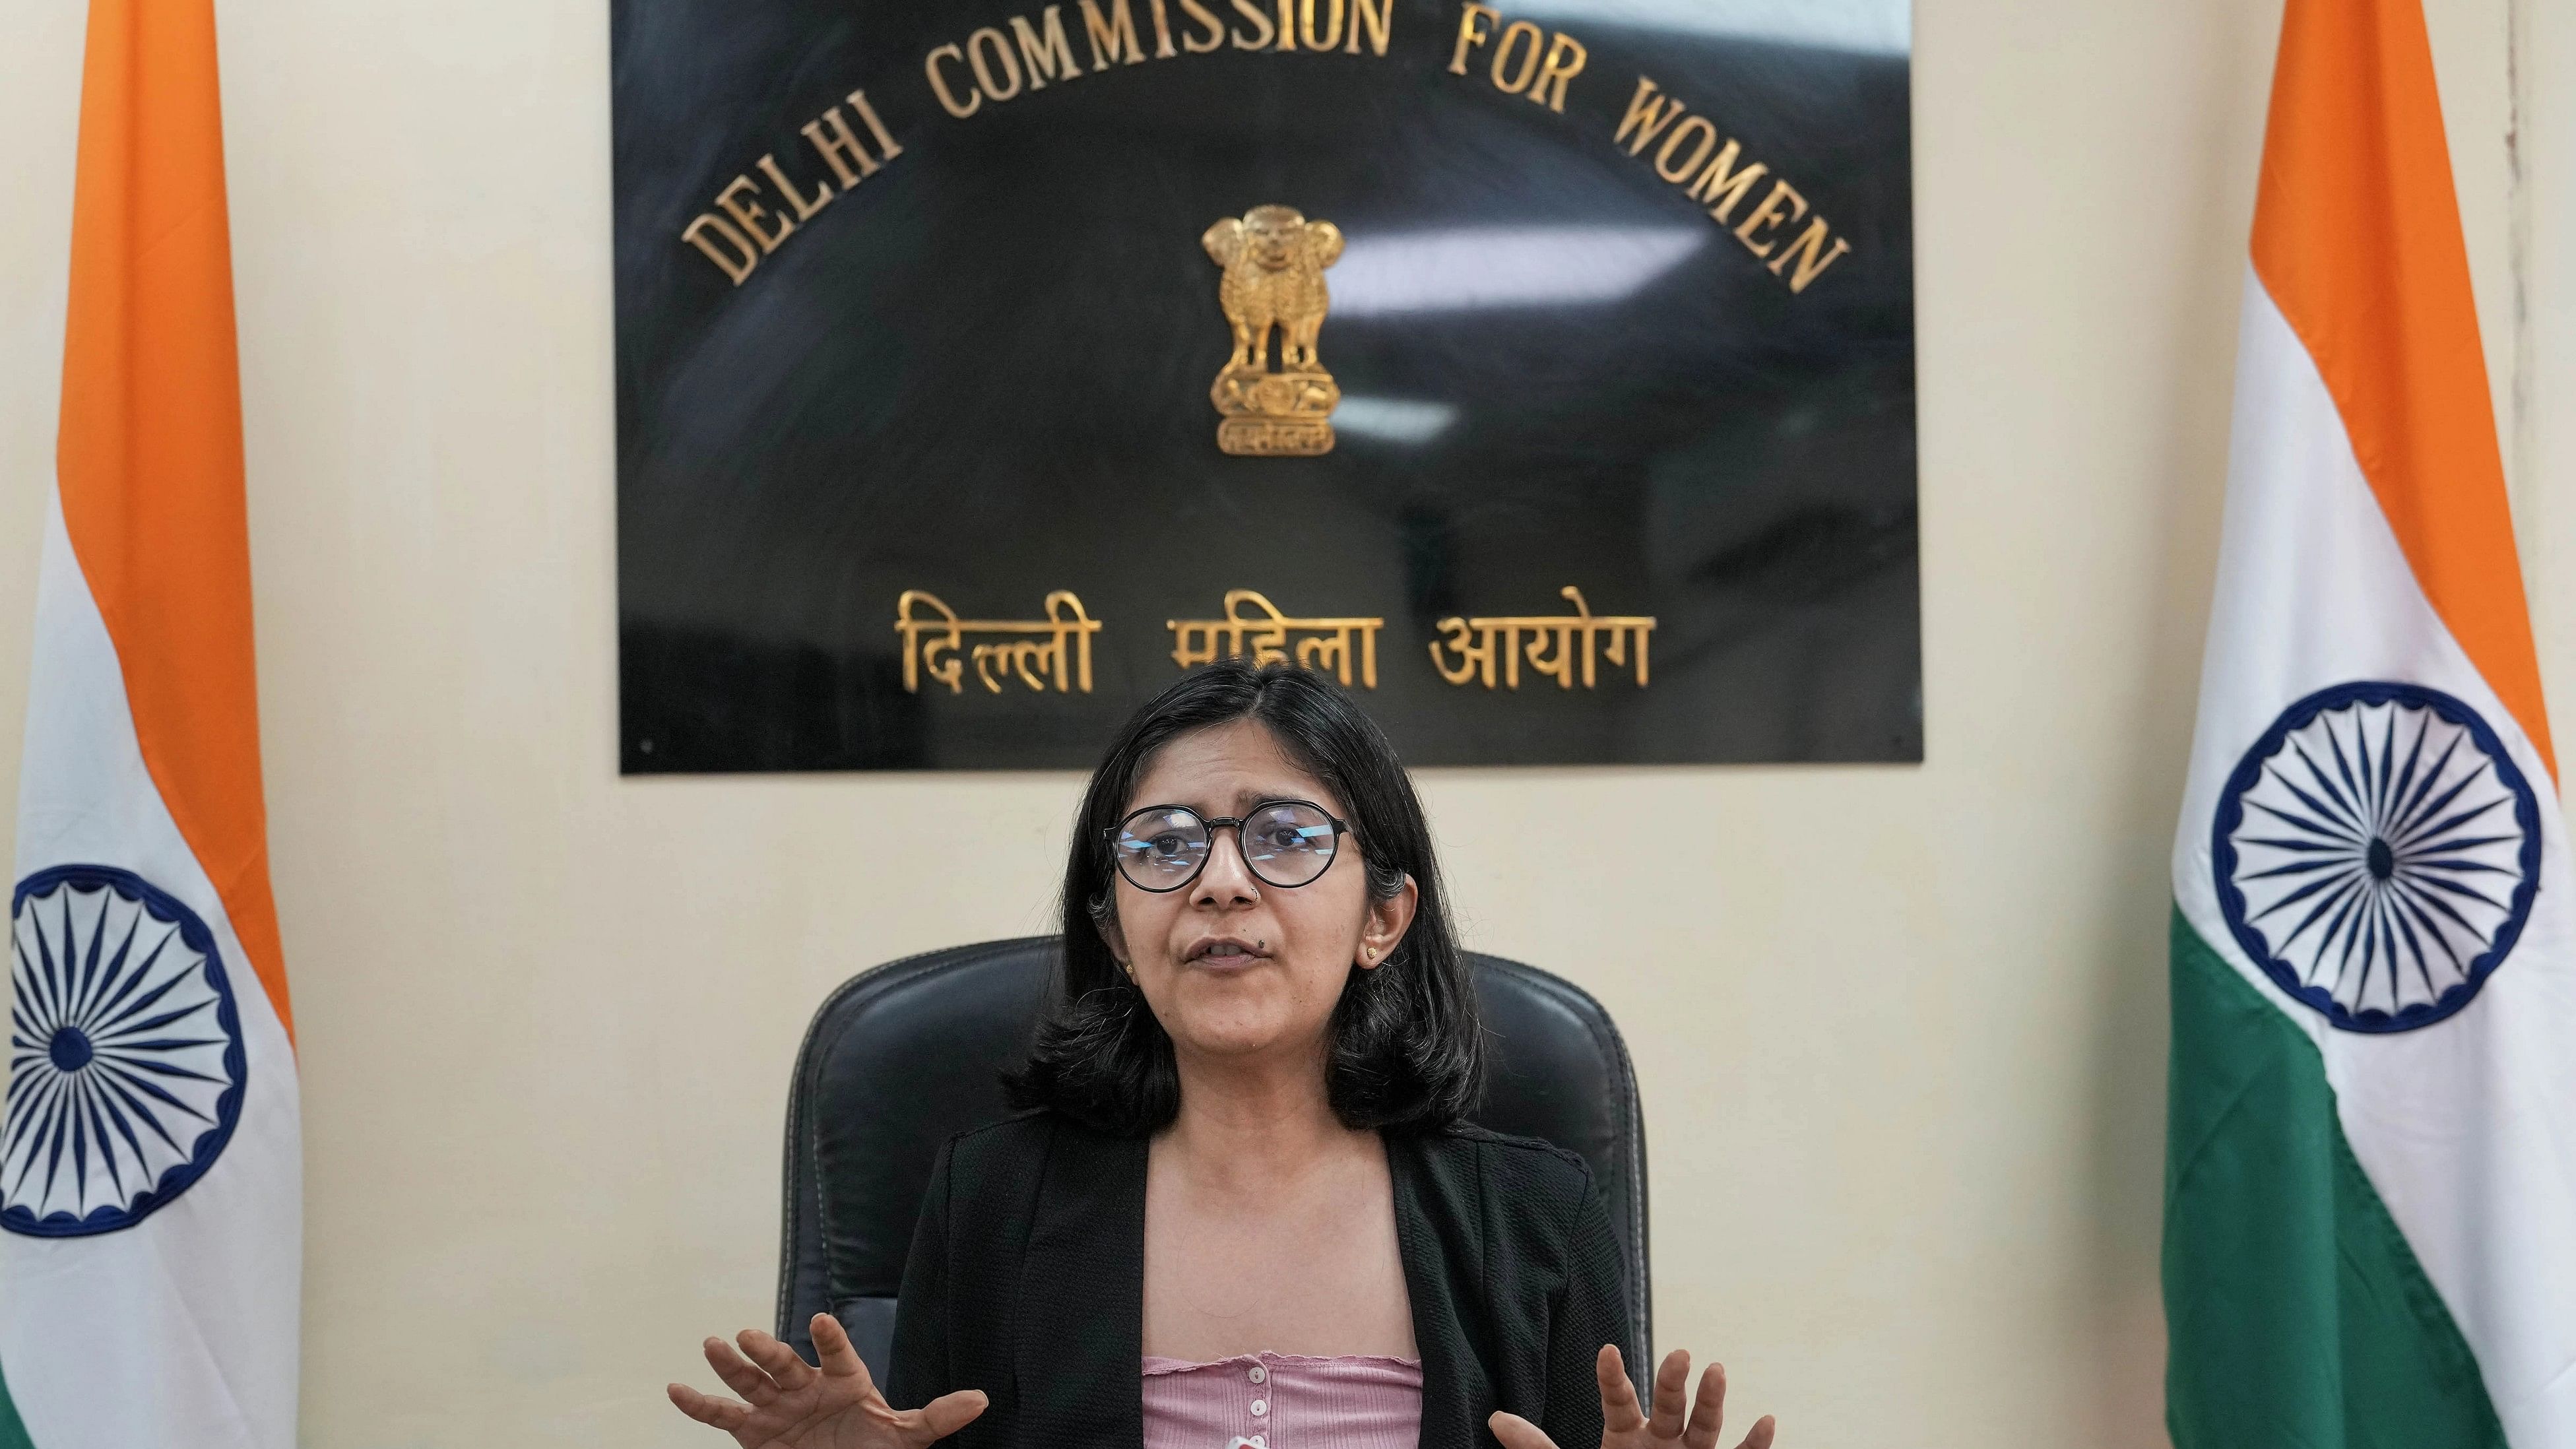 <div class="paragraphs"><p>Delhi Commission for Women Chairperson Swati Maliwal.</p></div>